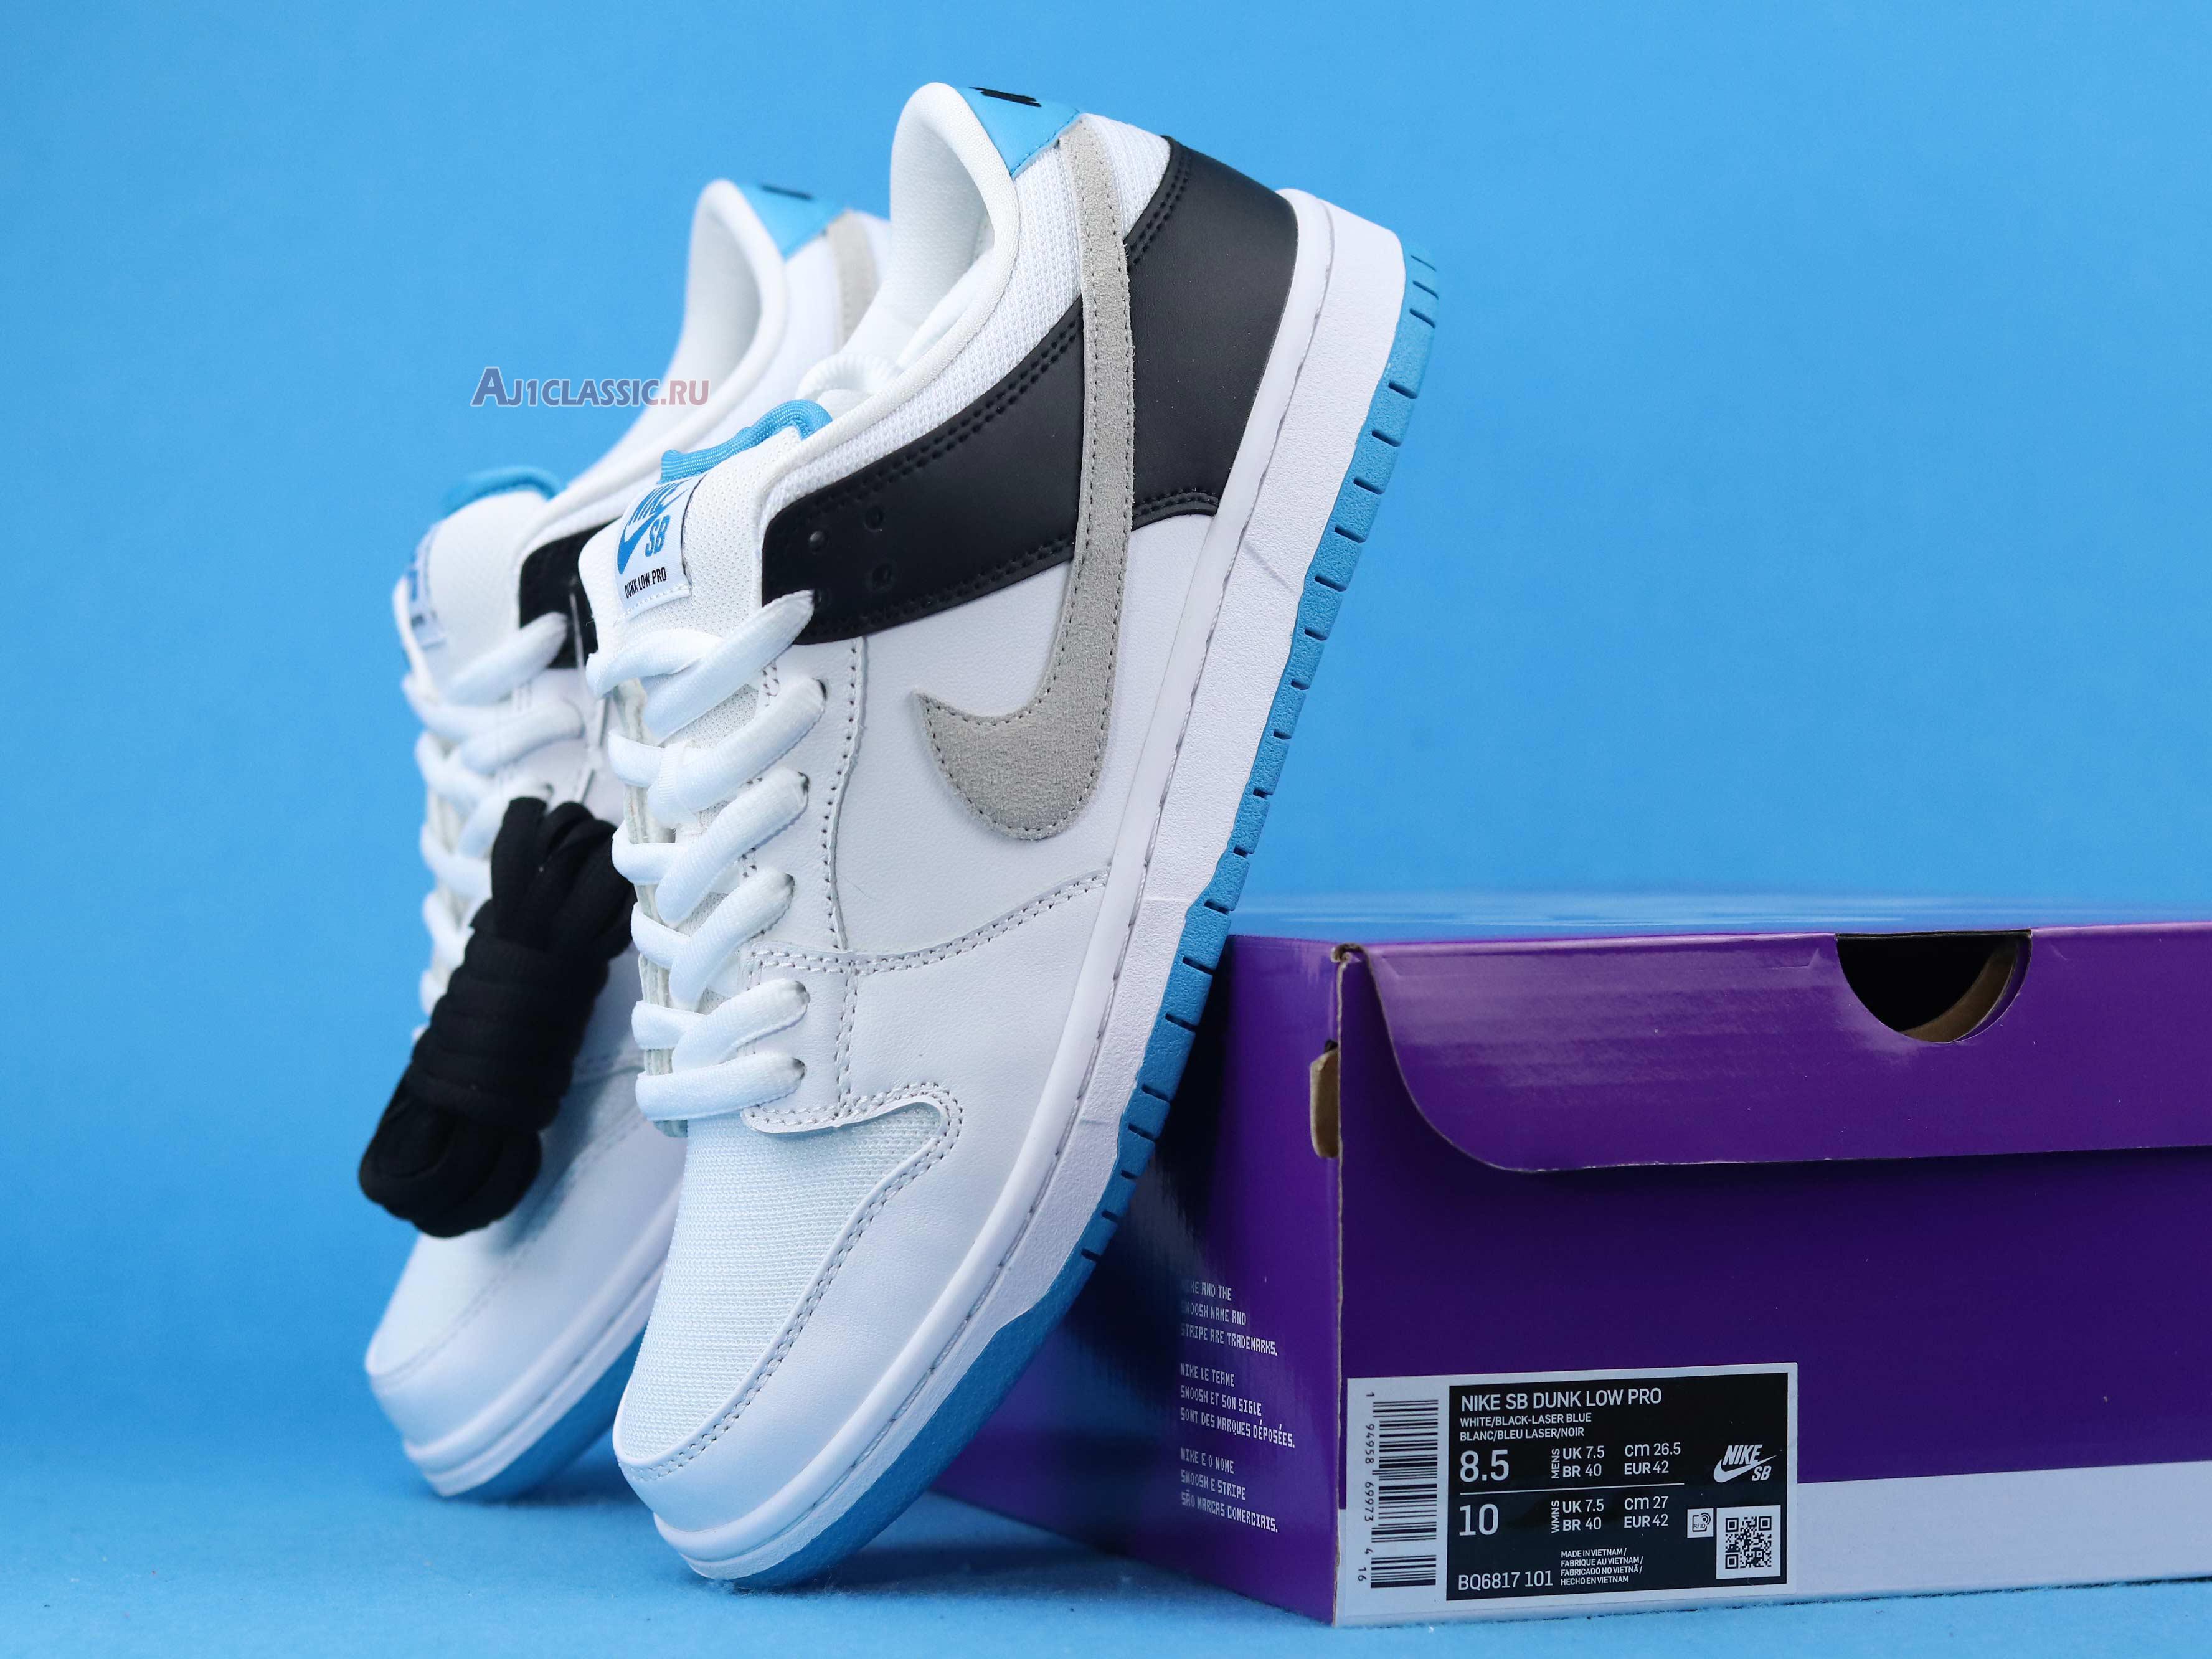 Nike Dunk Low Pro SB Laser Blue BQ6817-101 White/Black/Laser Blue/Neutral Grey Sneakers